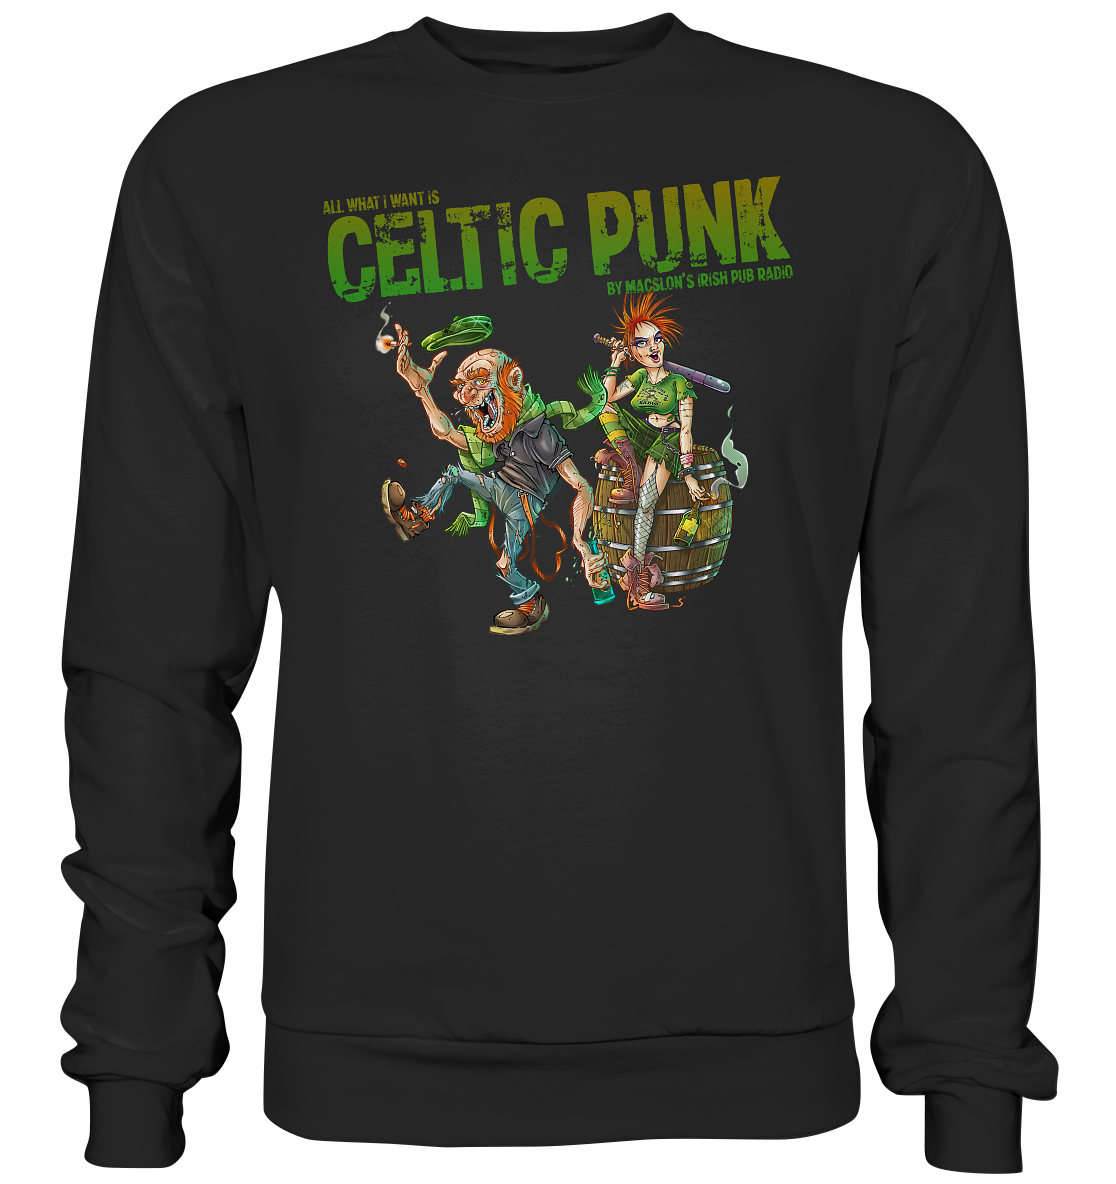 All What I Want Is "Celtic Punk" - Premium Sweatshirt